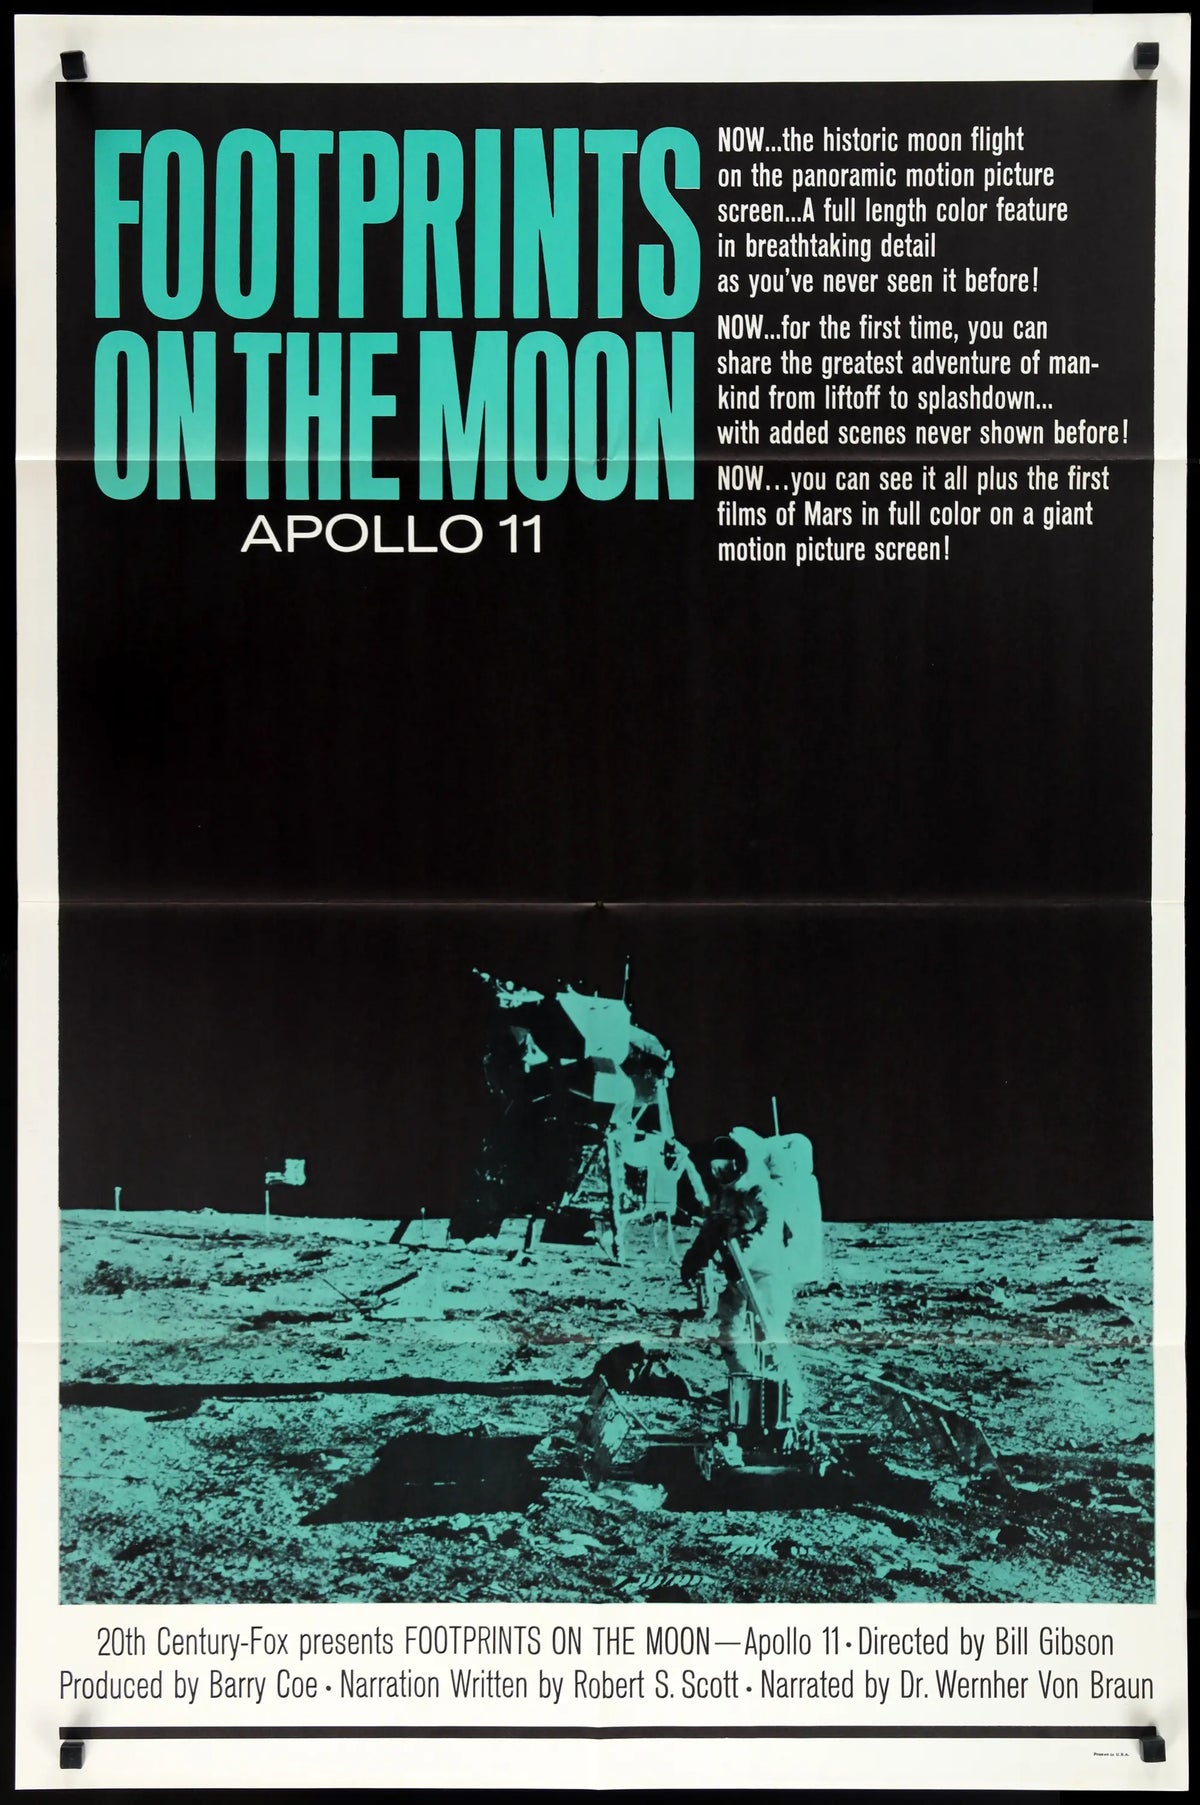 Footprints on the Moon: Apollo 11 (1969) original movie poster for sale at Original Film Art